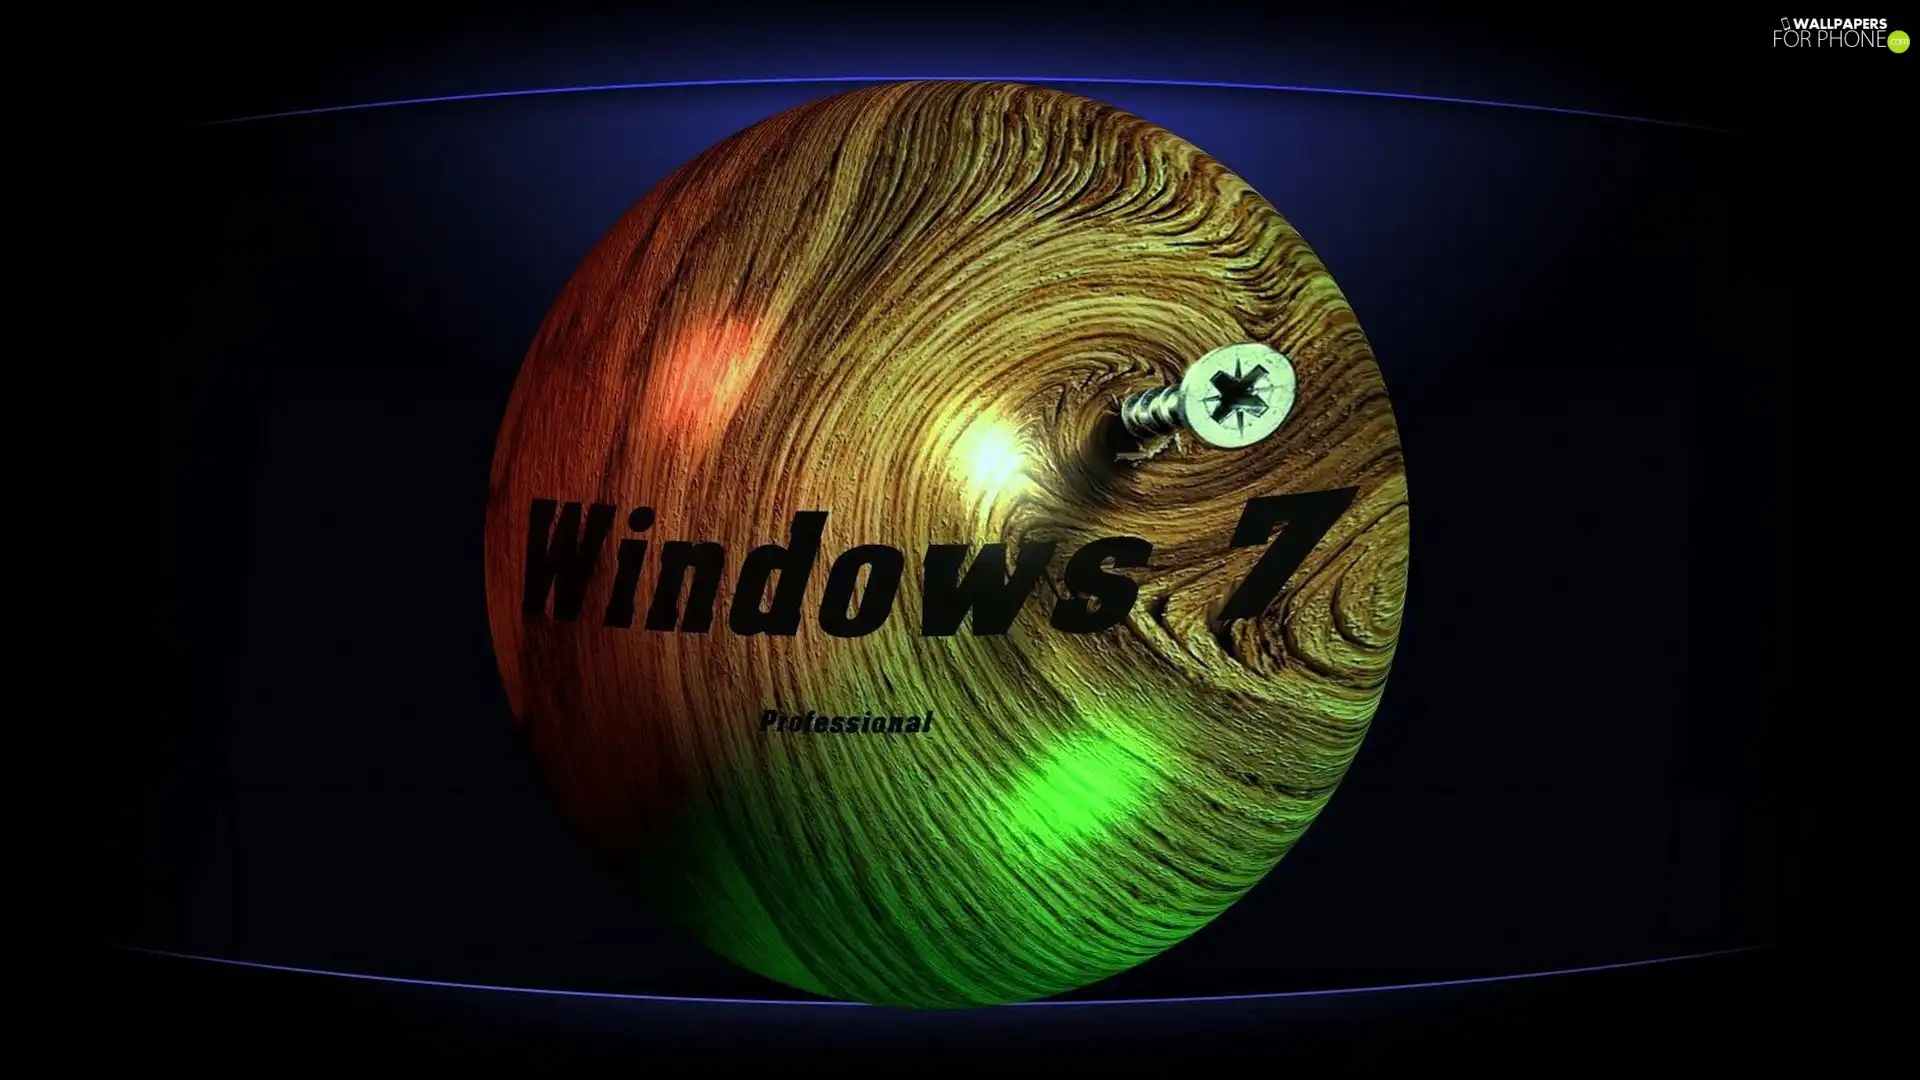 Windows 7 Professional, Orb